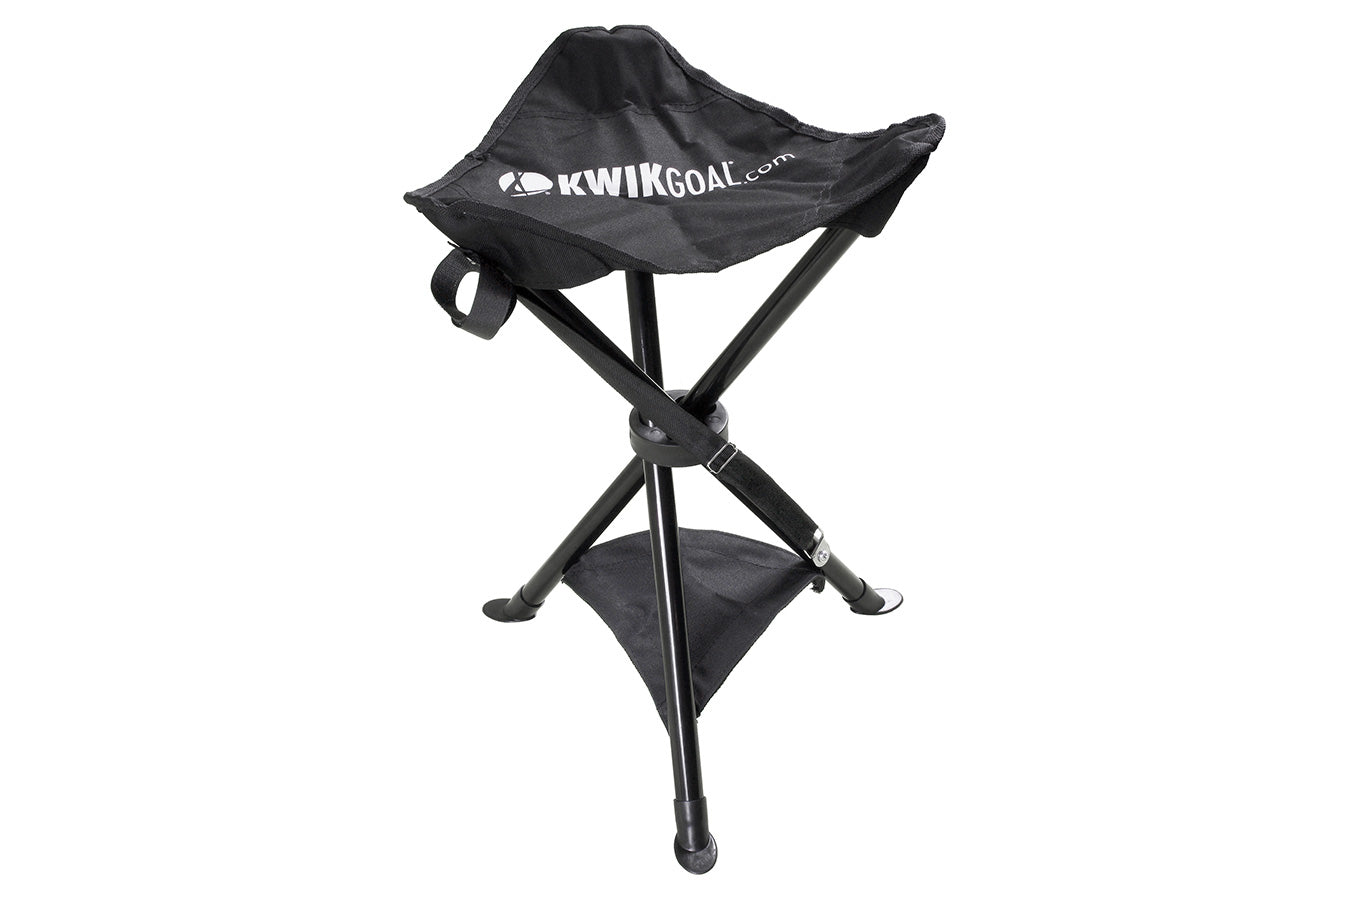 Kwikgoal Coaches Seat - Black